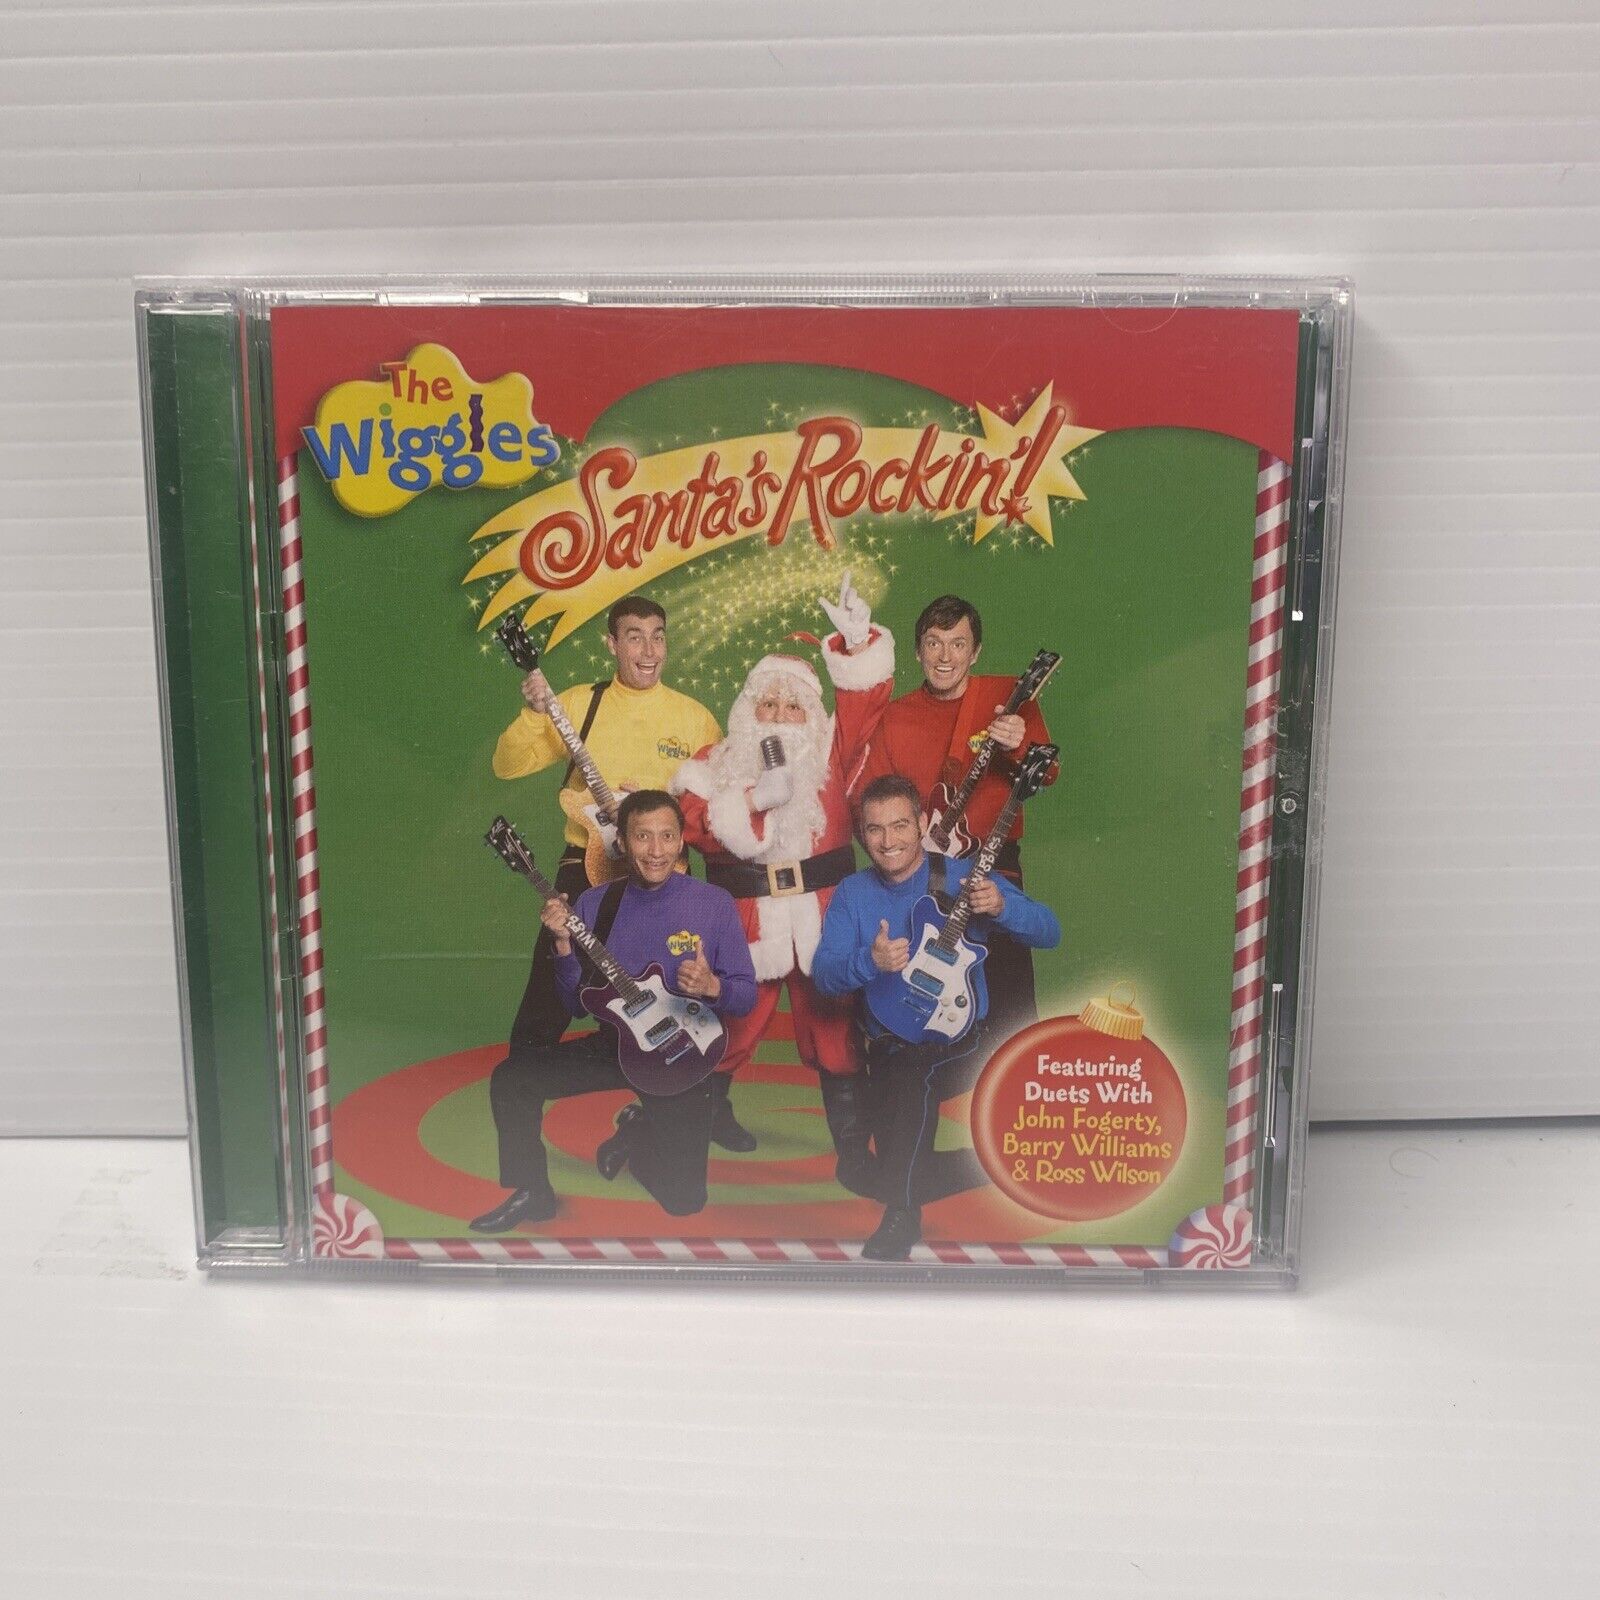 The Wiggles Santa’s Rockin’ (CD Album, 2004) Original Cast Australian Kids Music